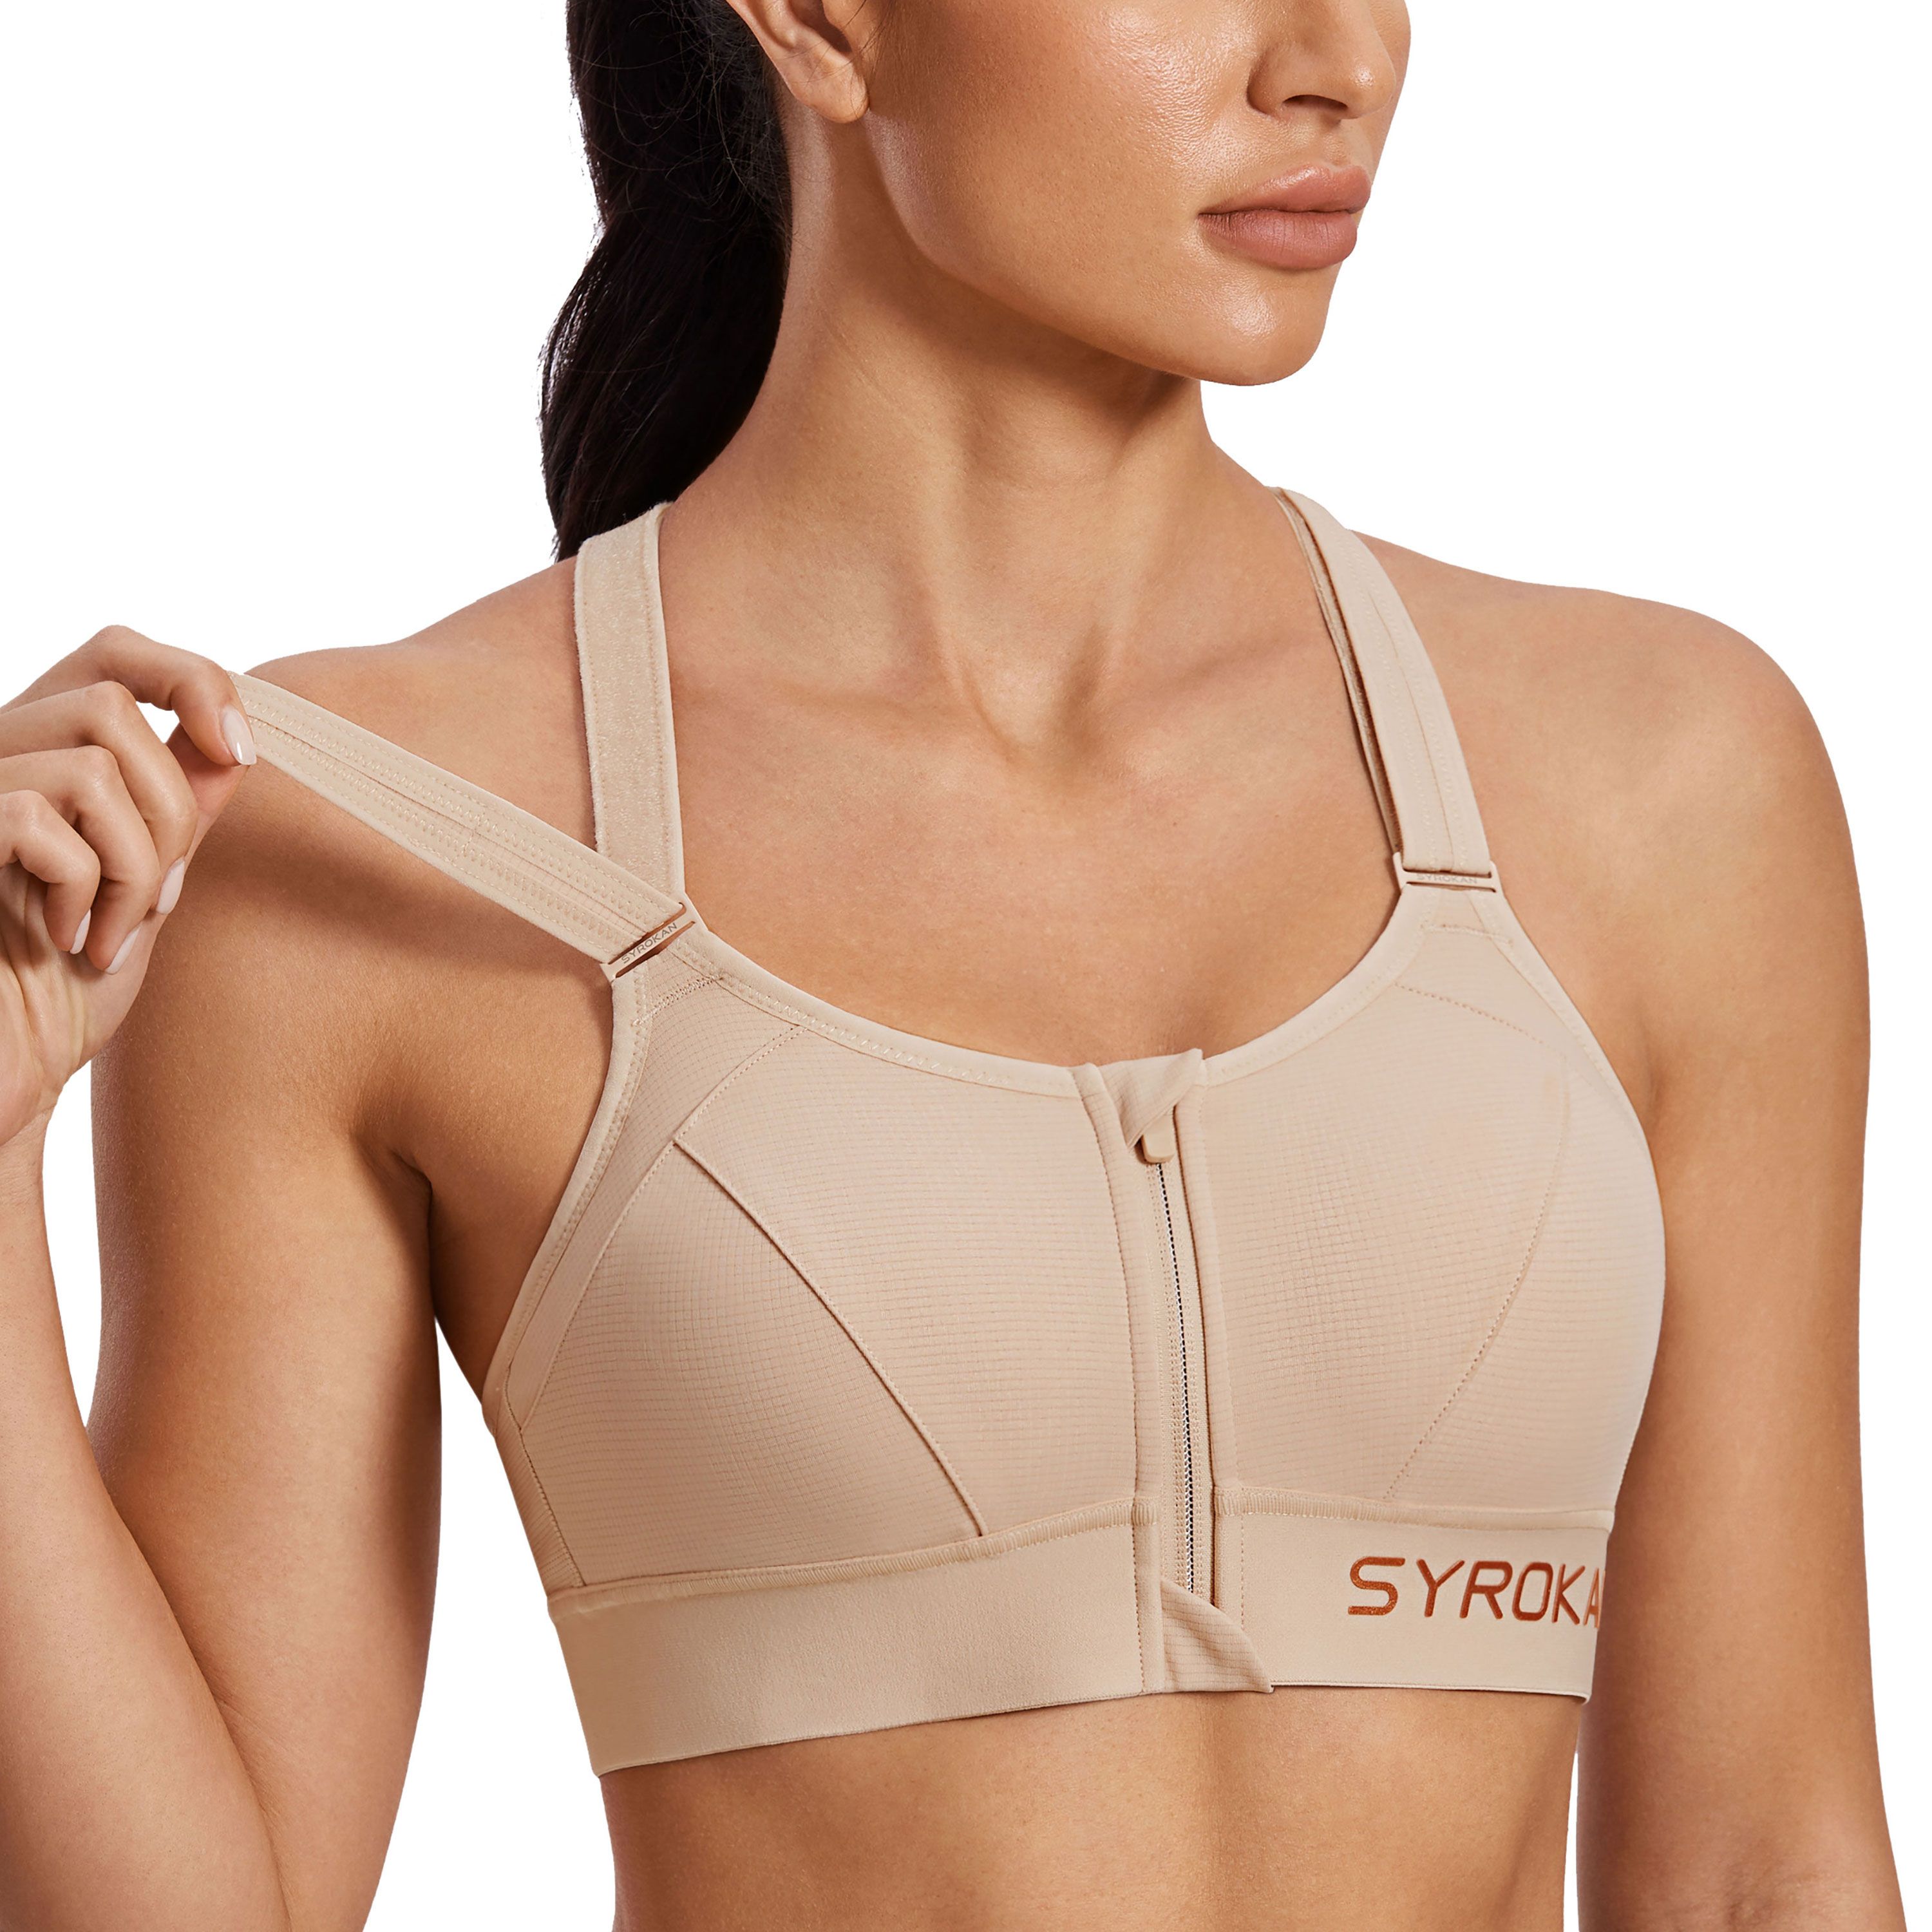 Syrokan women's high impact wirefree lavender gray sports bra size